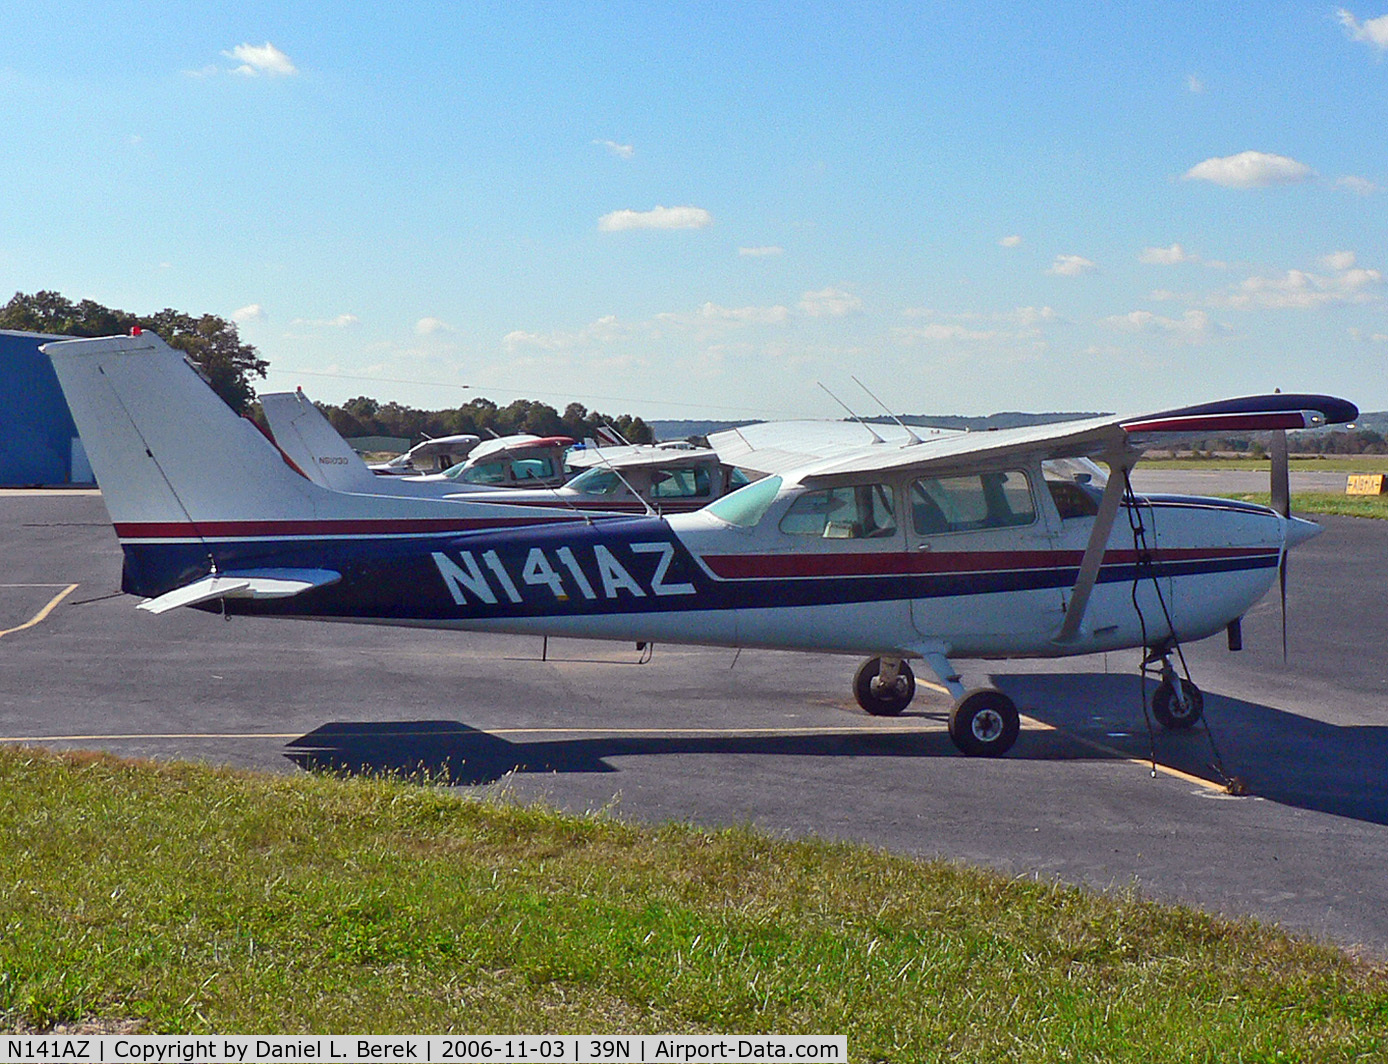 N141AZ, Cessna 172N C/N 17270822, Red, white, and blue Skyhawk heads a lineup at Princeton Airport.